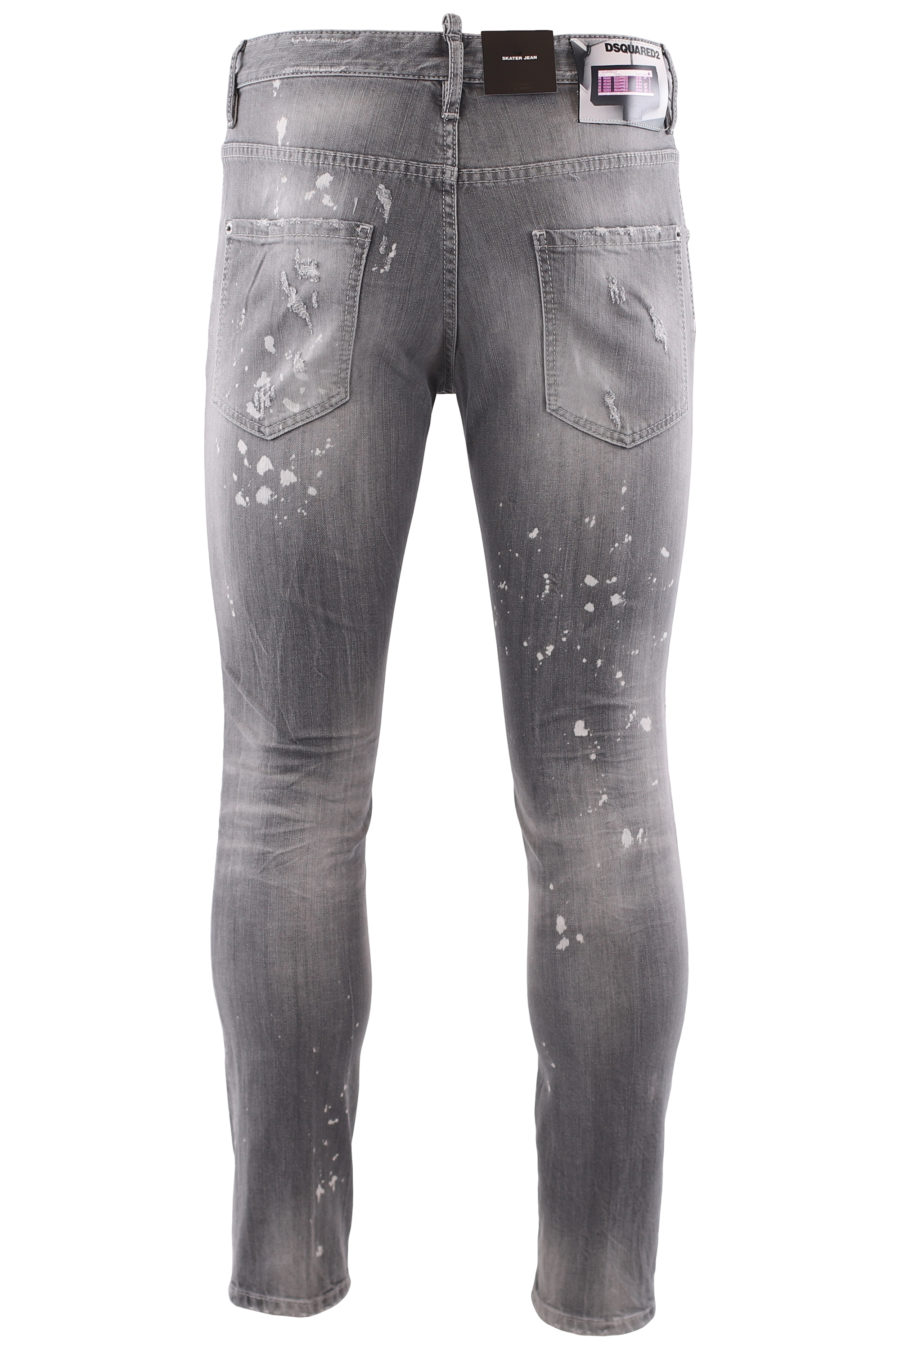 Jeans "Skaterjeans" grau getragen - IMG 6694